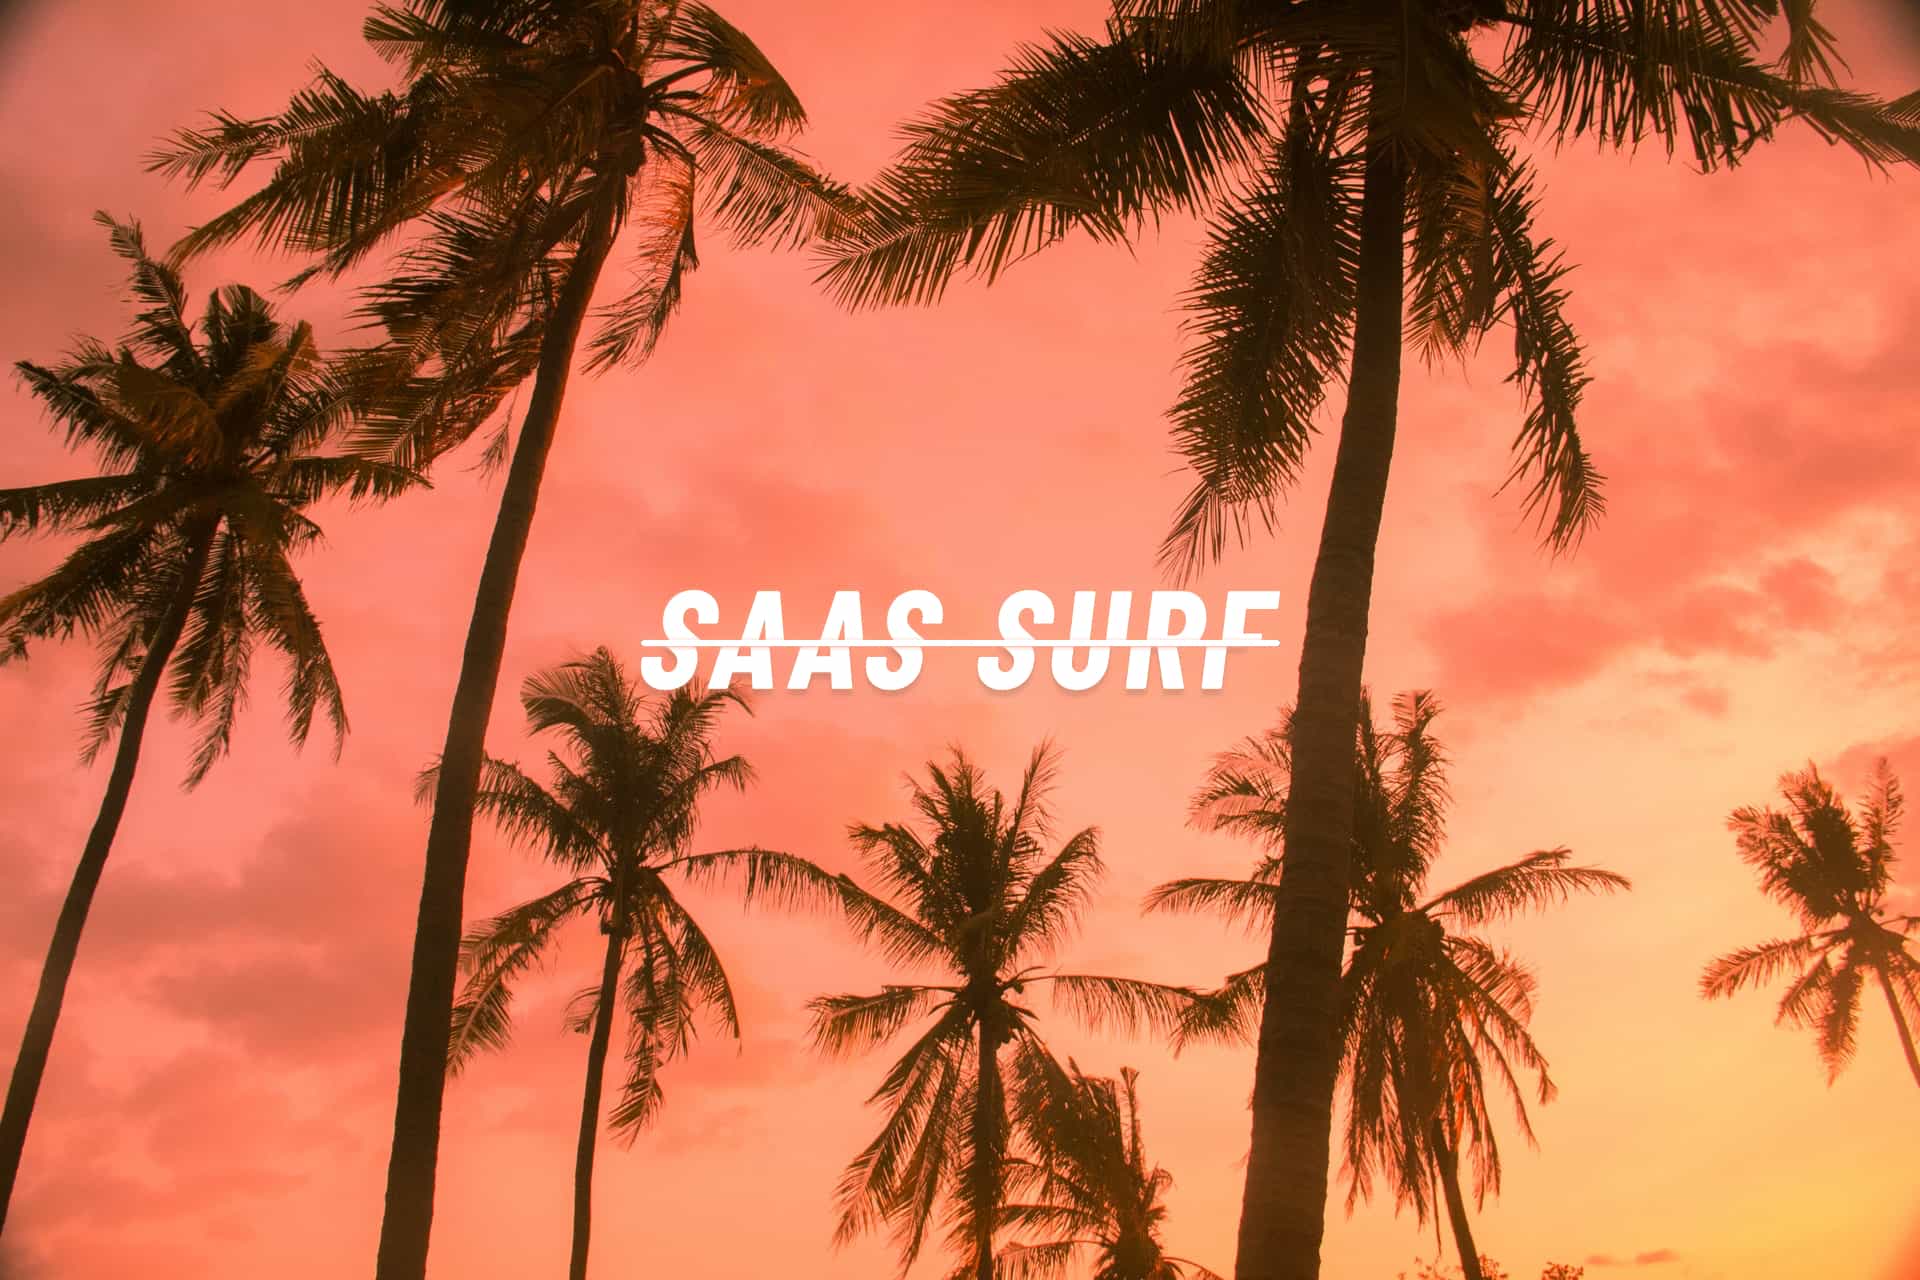 SaaS Surf logo on a palm tree and beach img